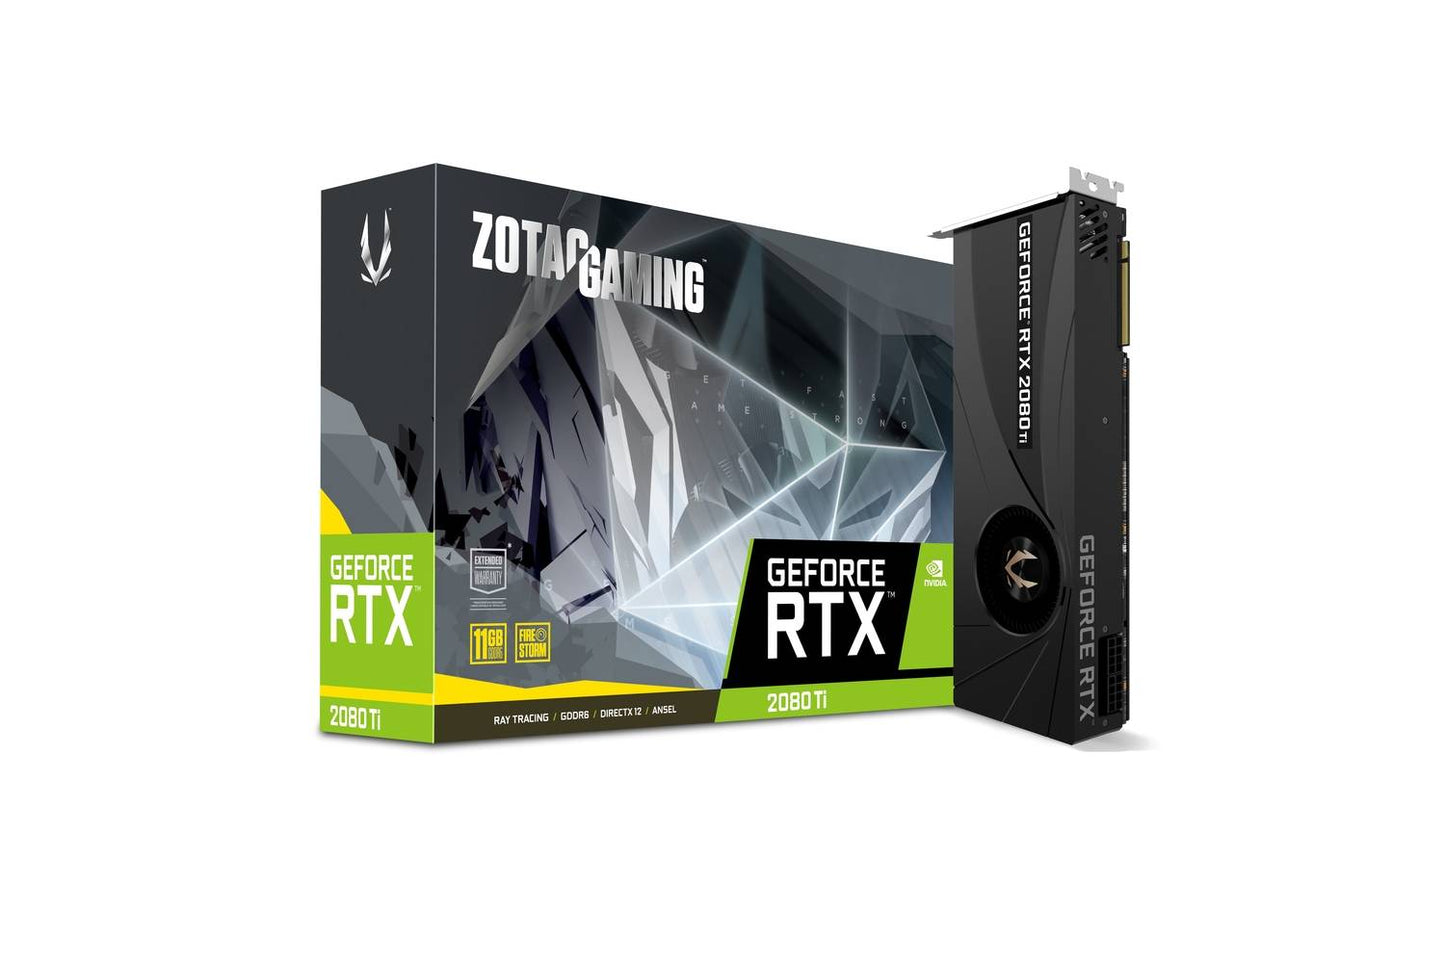 Zotac Gaming GeForce RTX 2080 Ti Blower 11GB Graphics Card